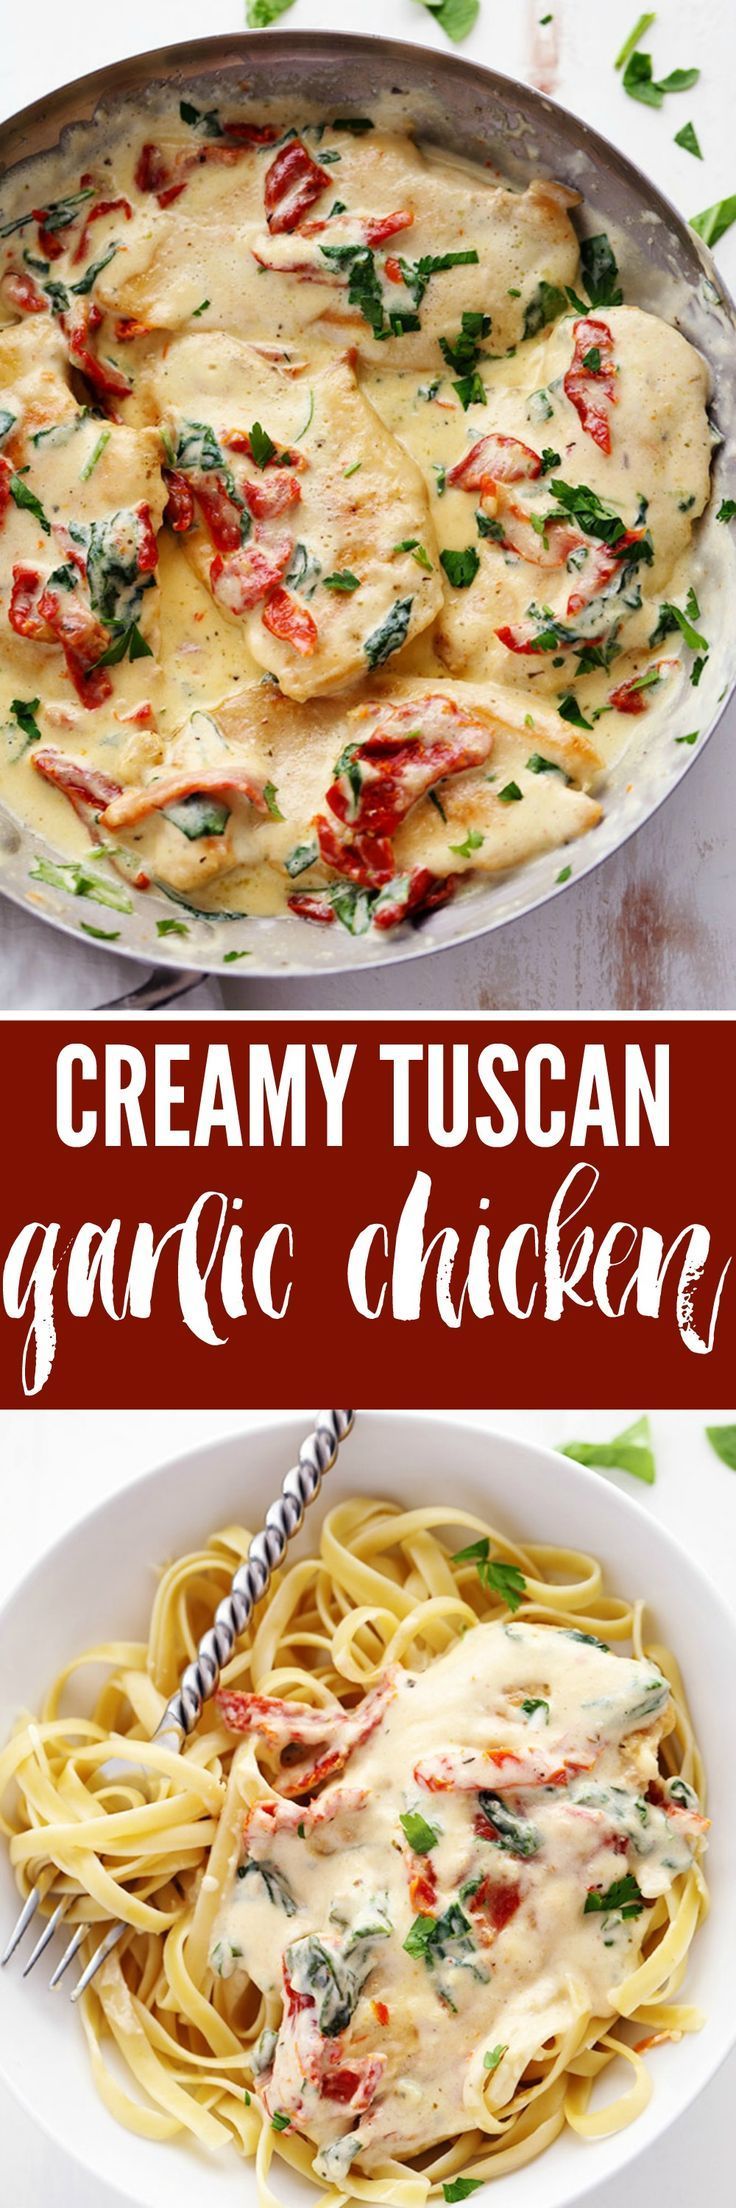 Creamy Tuscan Garlic Chicken has the most amazing creamy garlic sauce with spinach